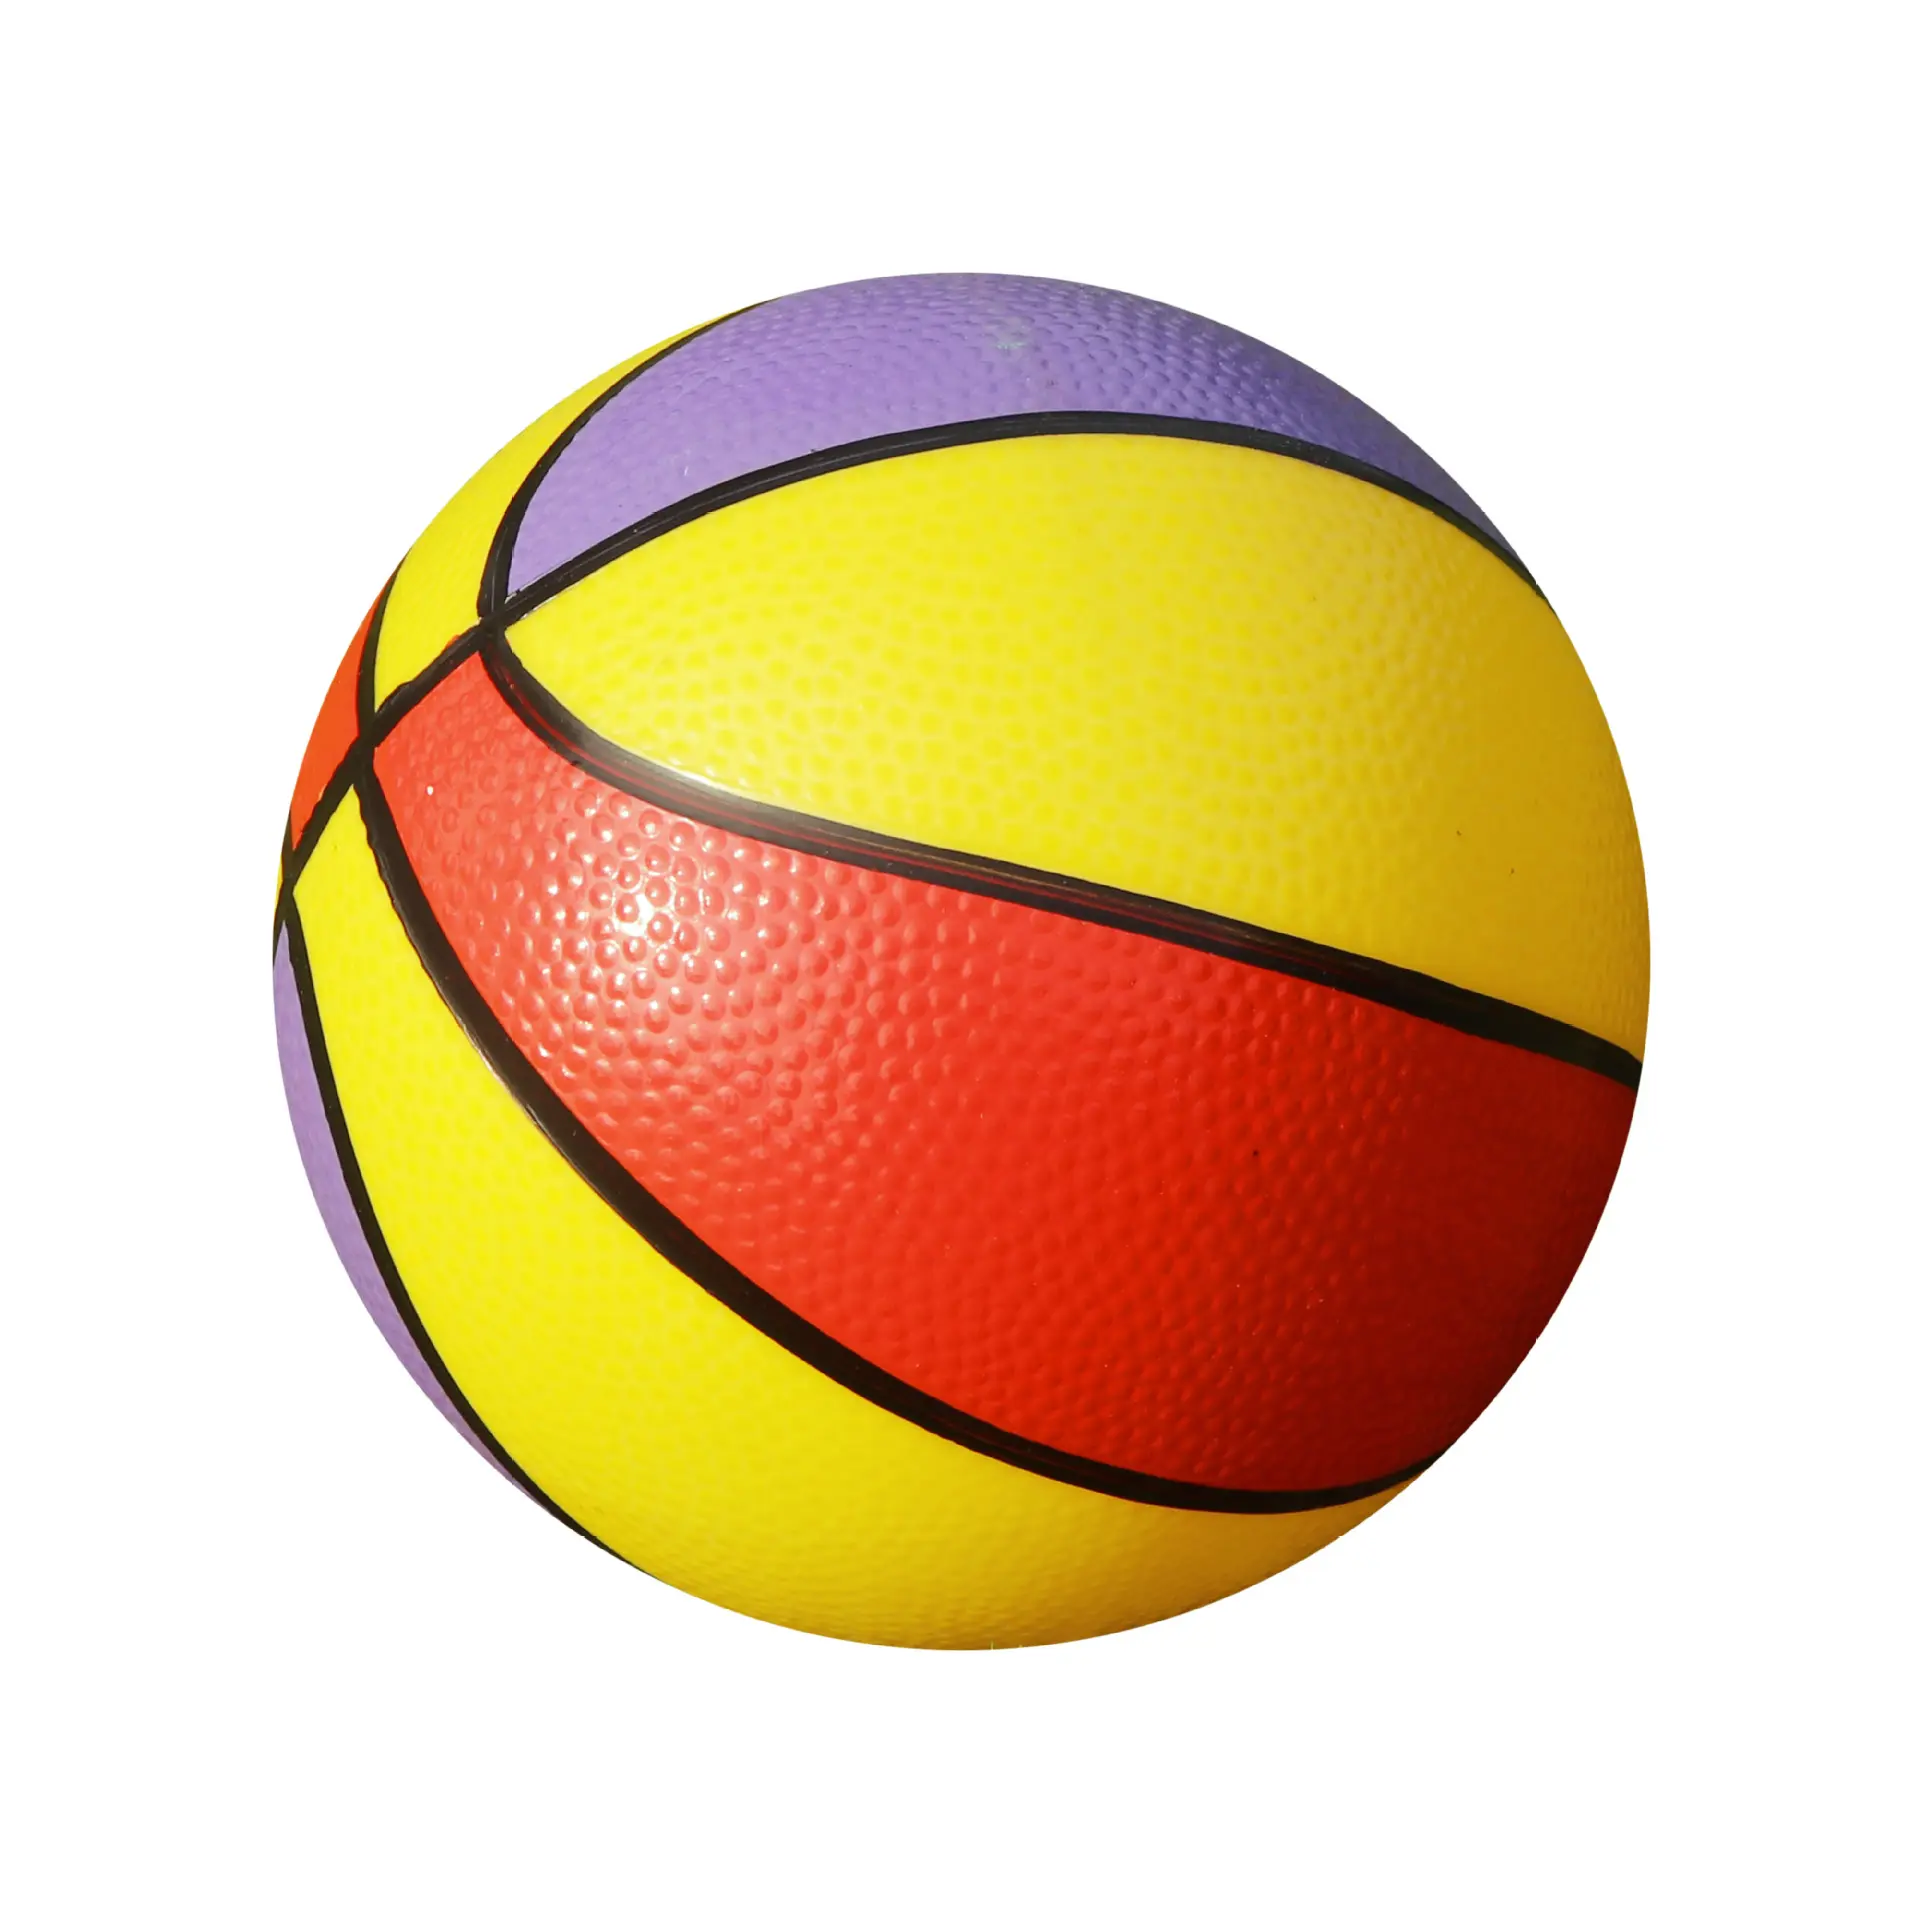 DESKJOYBALLミニバスケットボールインフレータブルミニチュアバスケットボール耐久性のあるPVC素材プールの屋内パーティーに最適